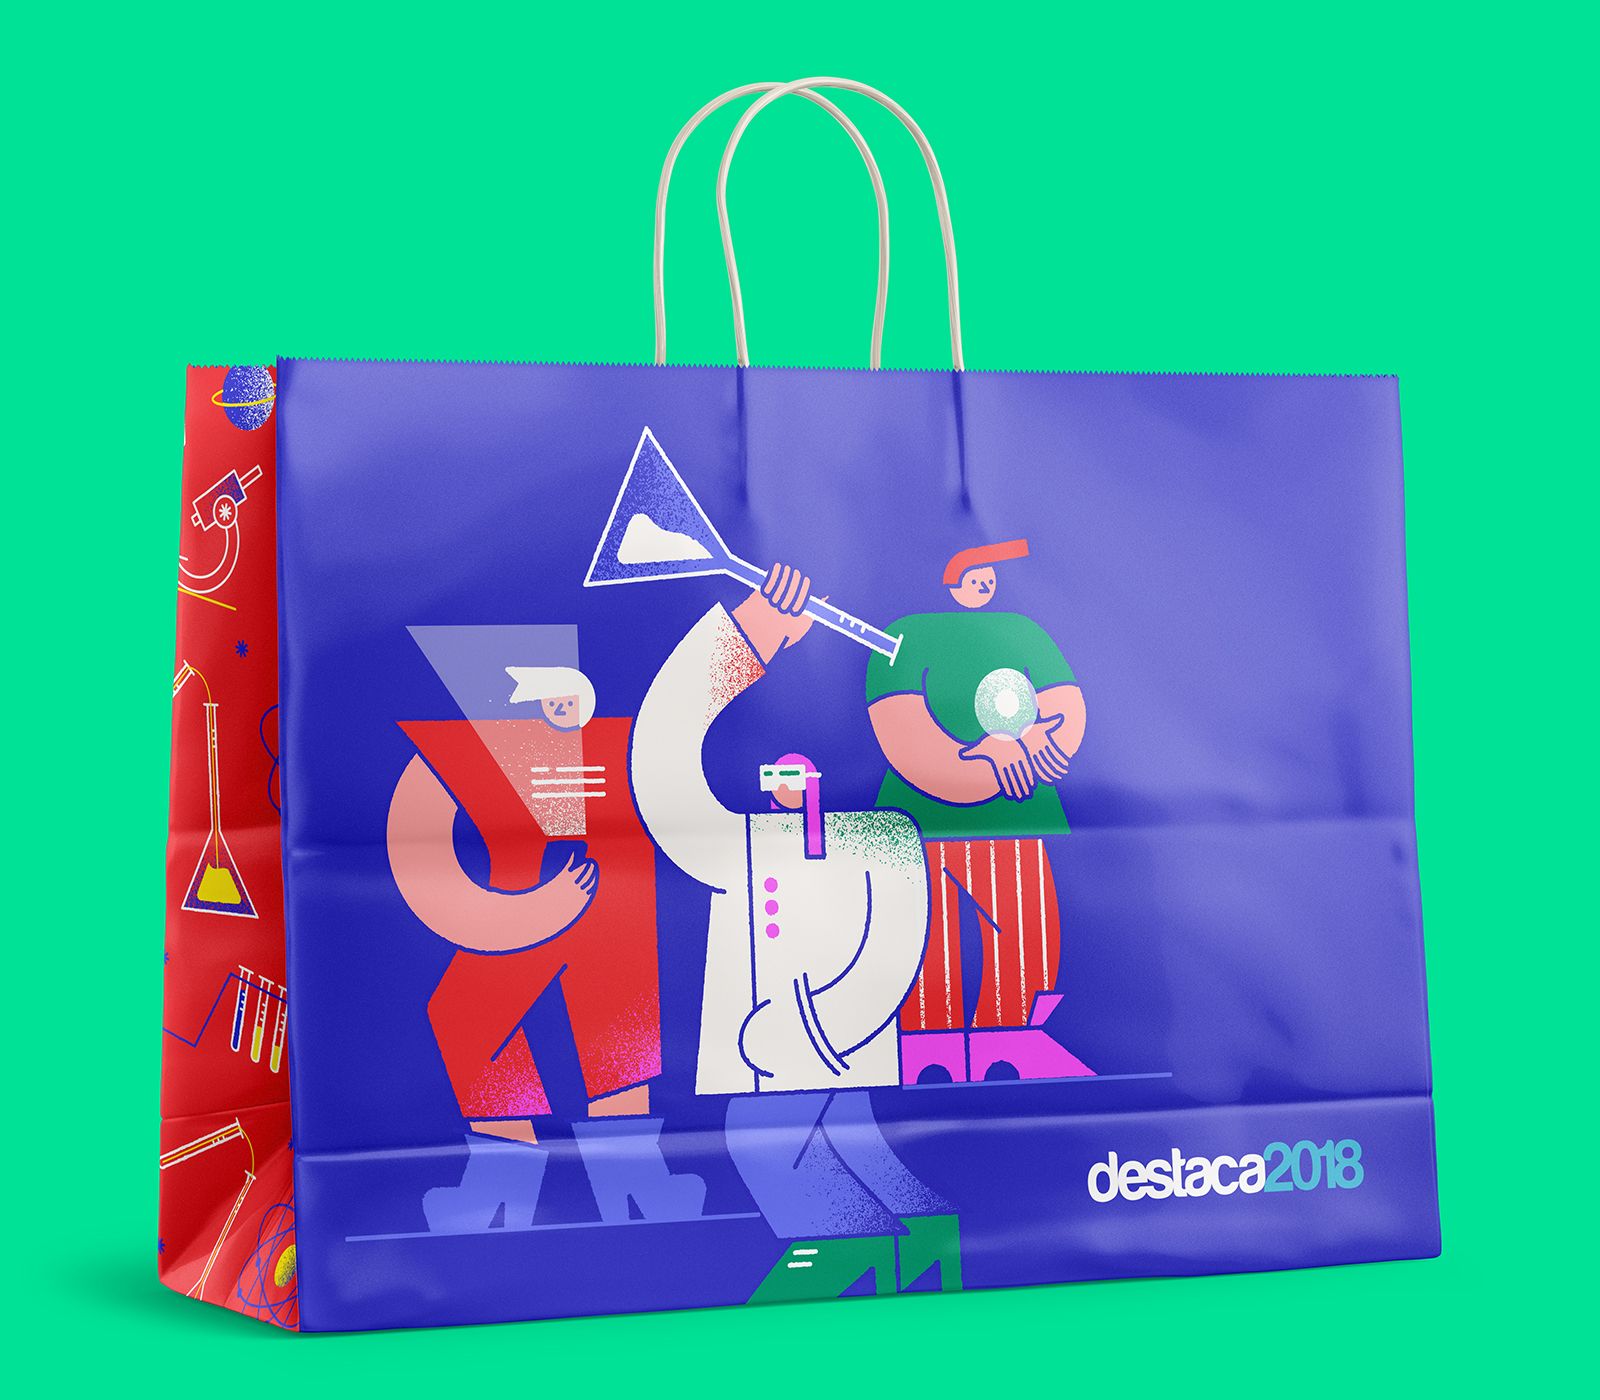 Destaca 2018 Fair paper bag - Eclectick Studio